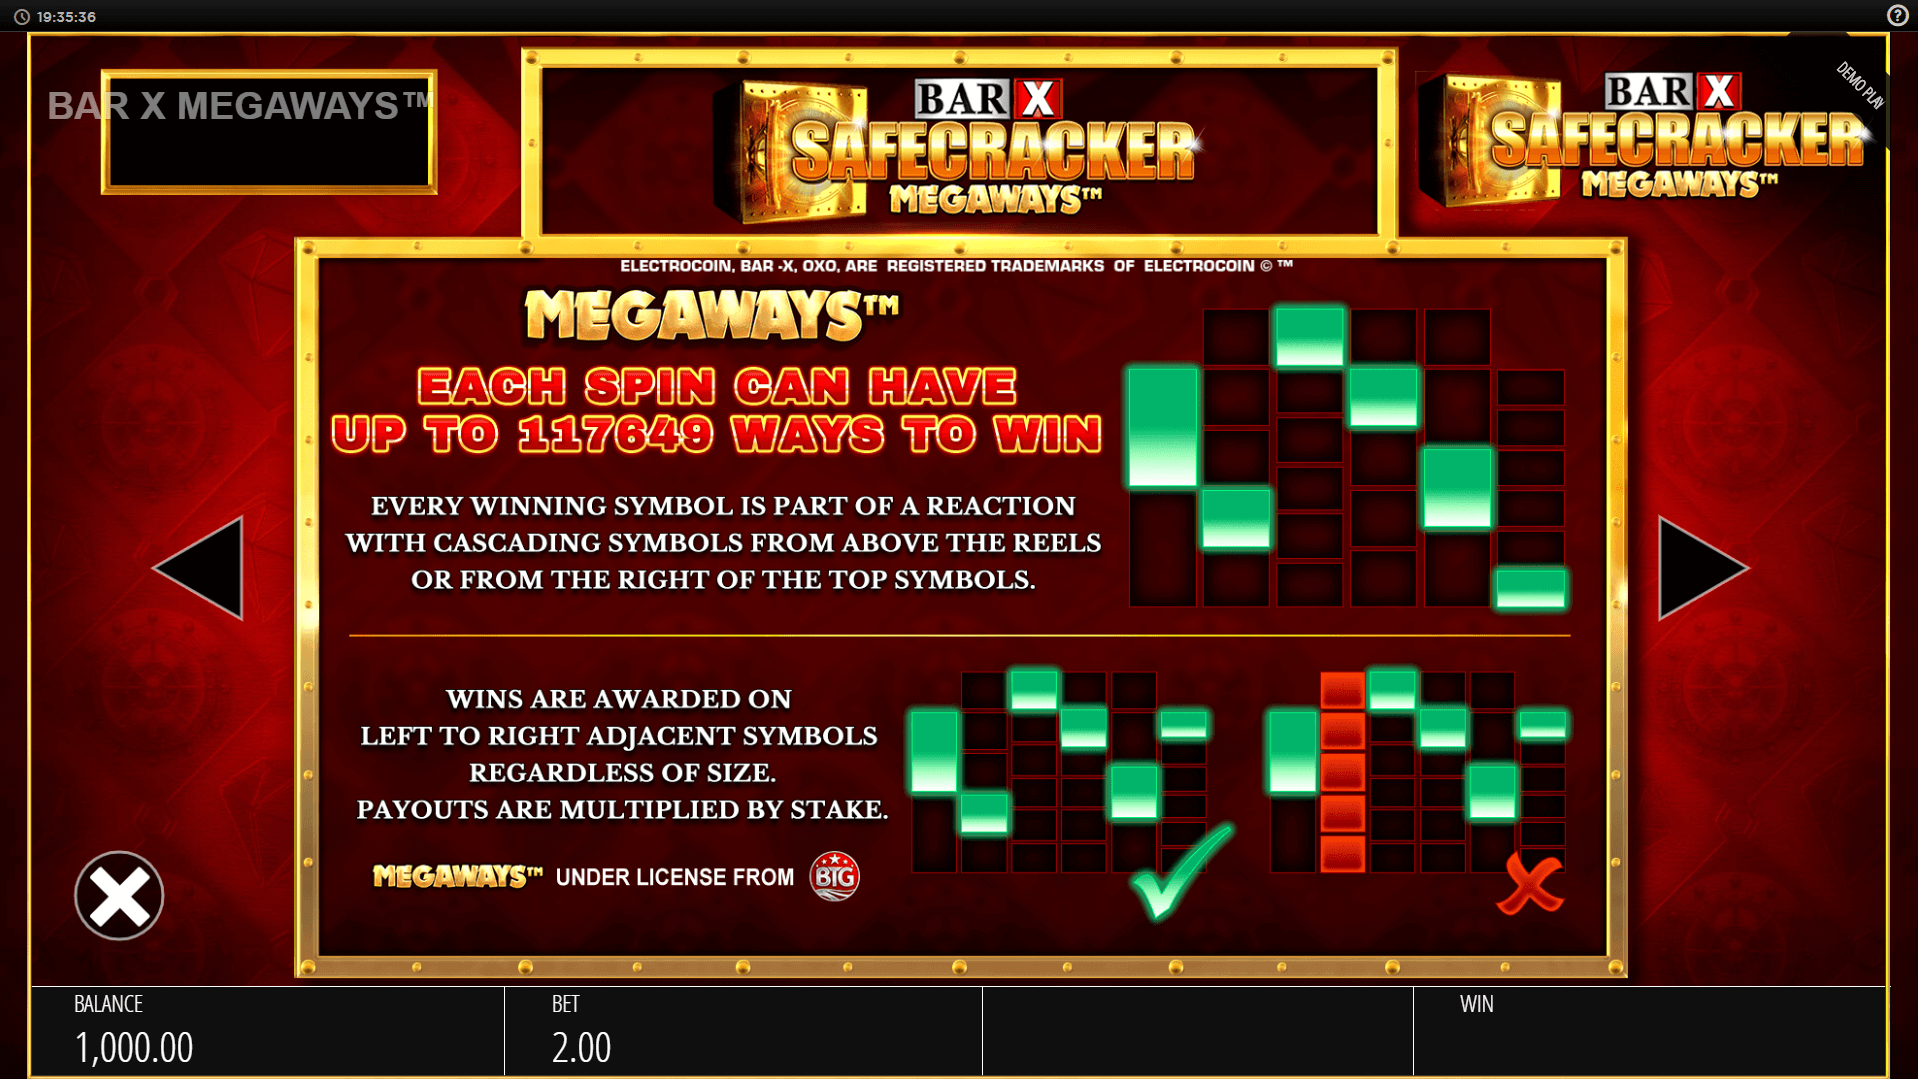 bar x safecracker megaways slot machine detail image 3